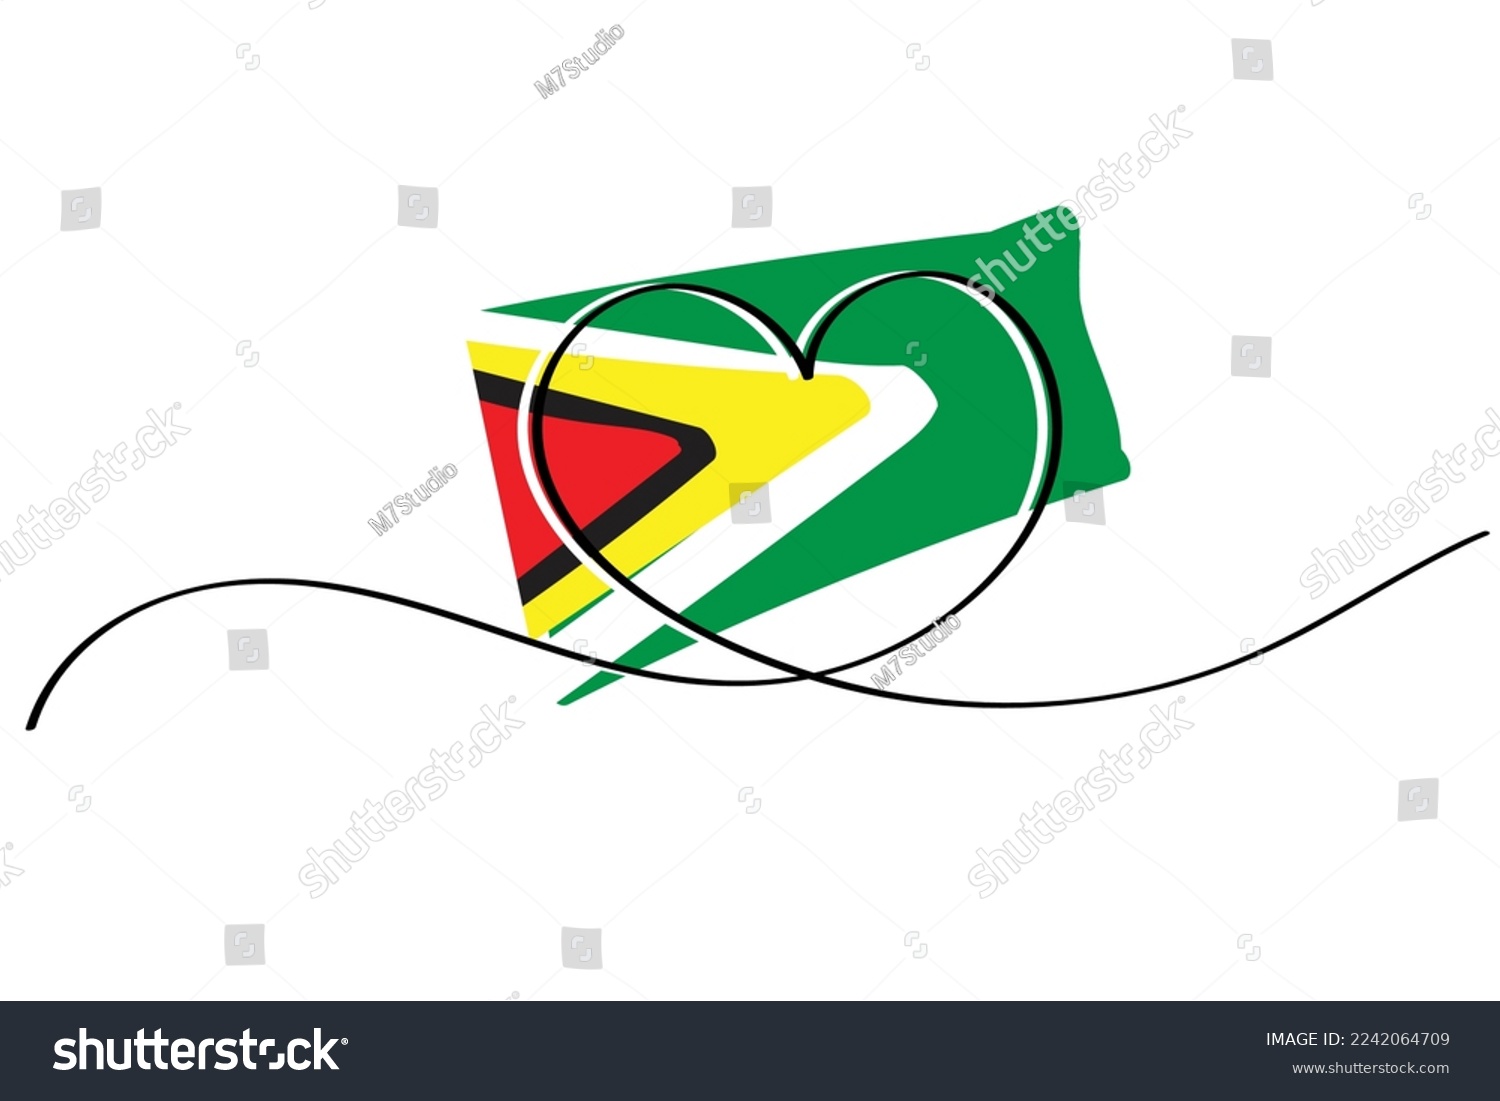 SVG of Line art of heart symbol with Guyana flag. Vector art. Minimalist art design. Isolated graphics. Nationalism. Guyanese flag. svg